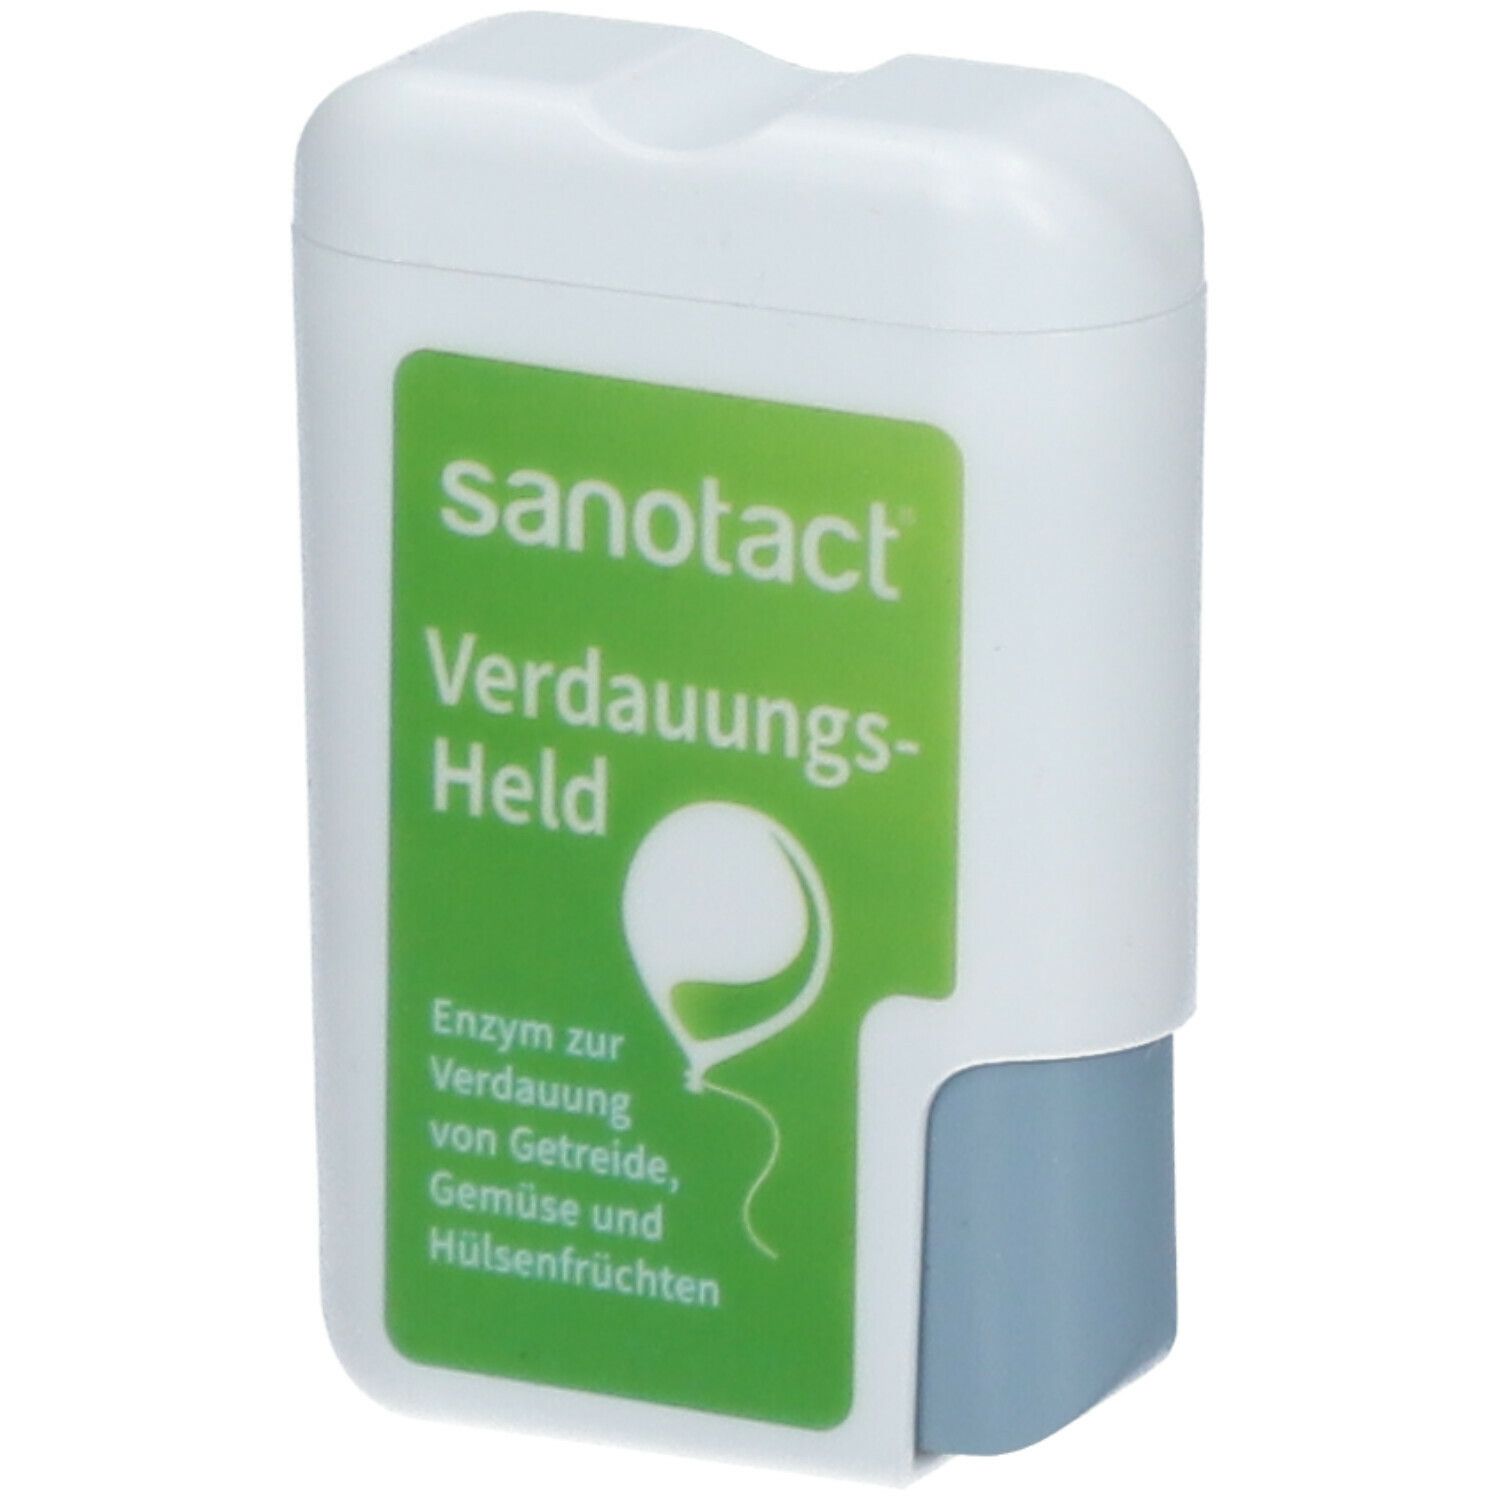 sanotact® VerdauungsHeld Mini-Tabs